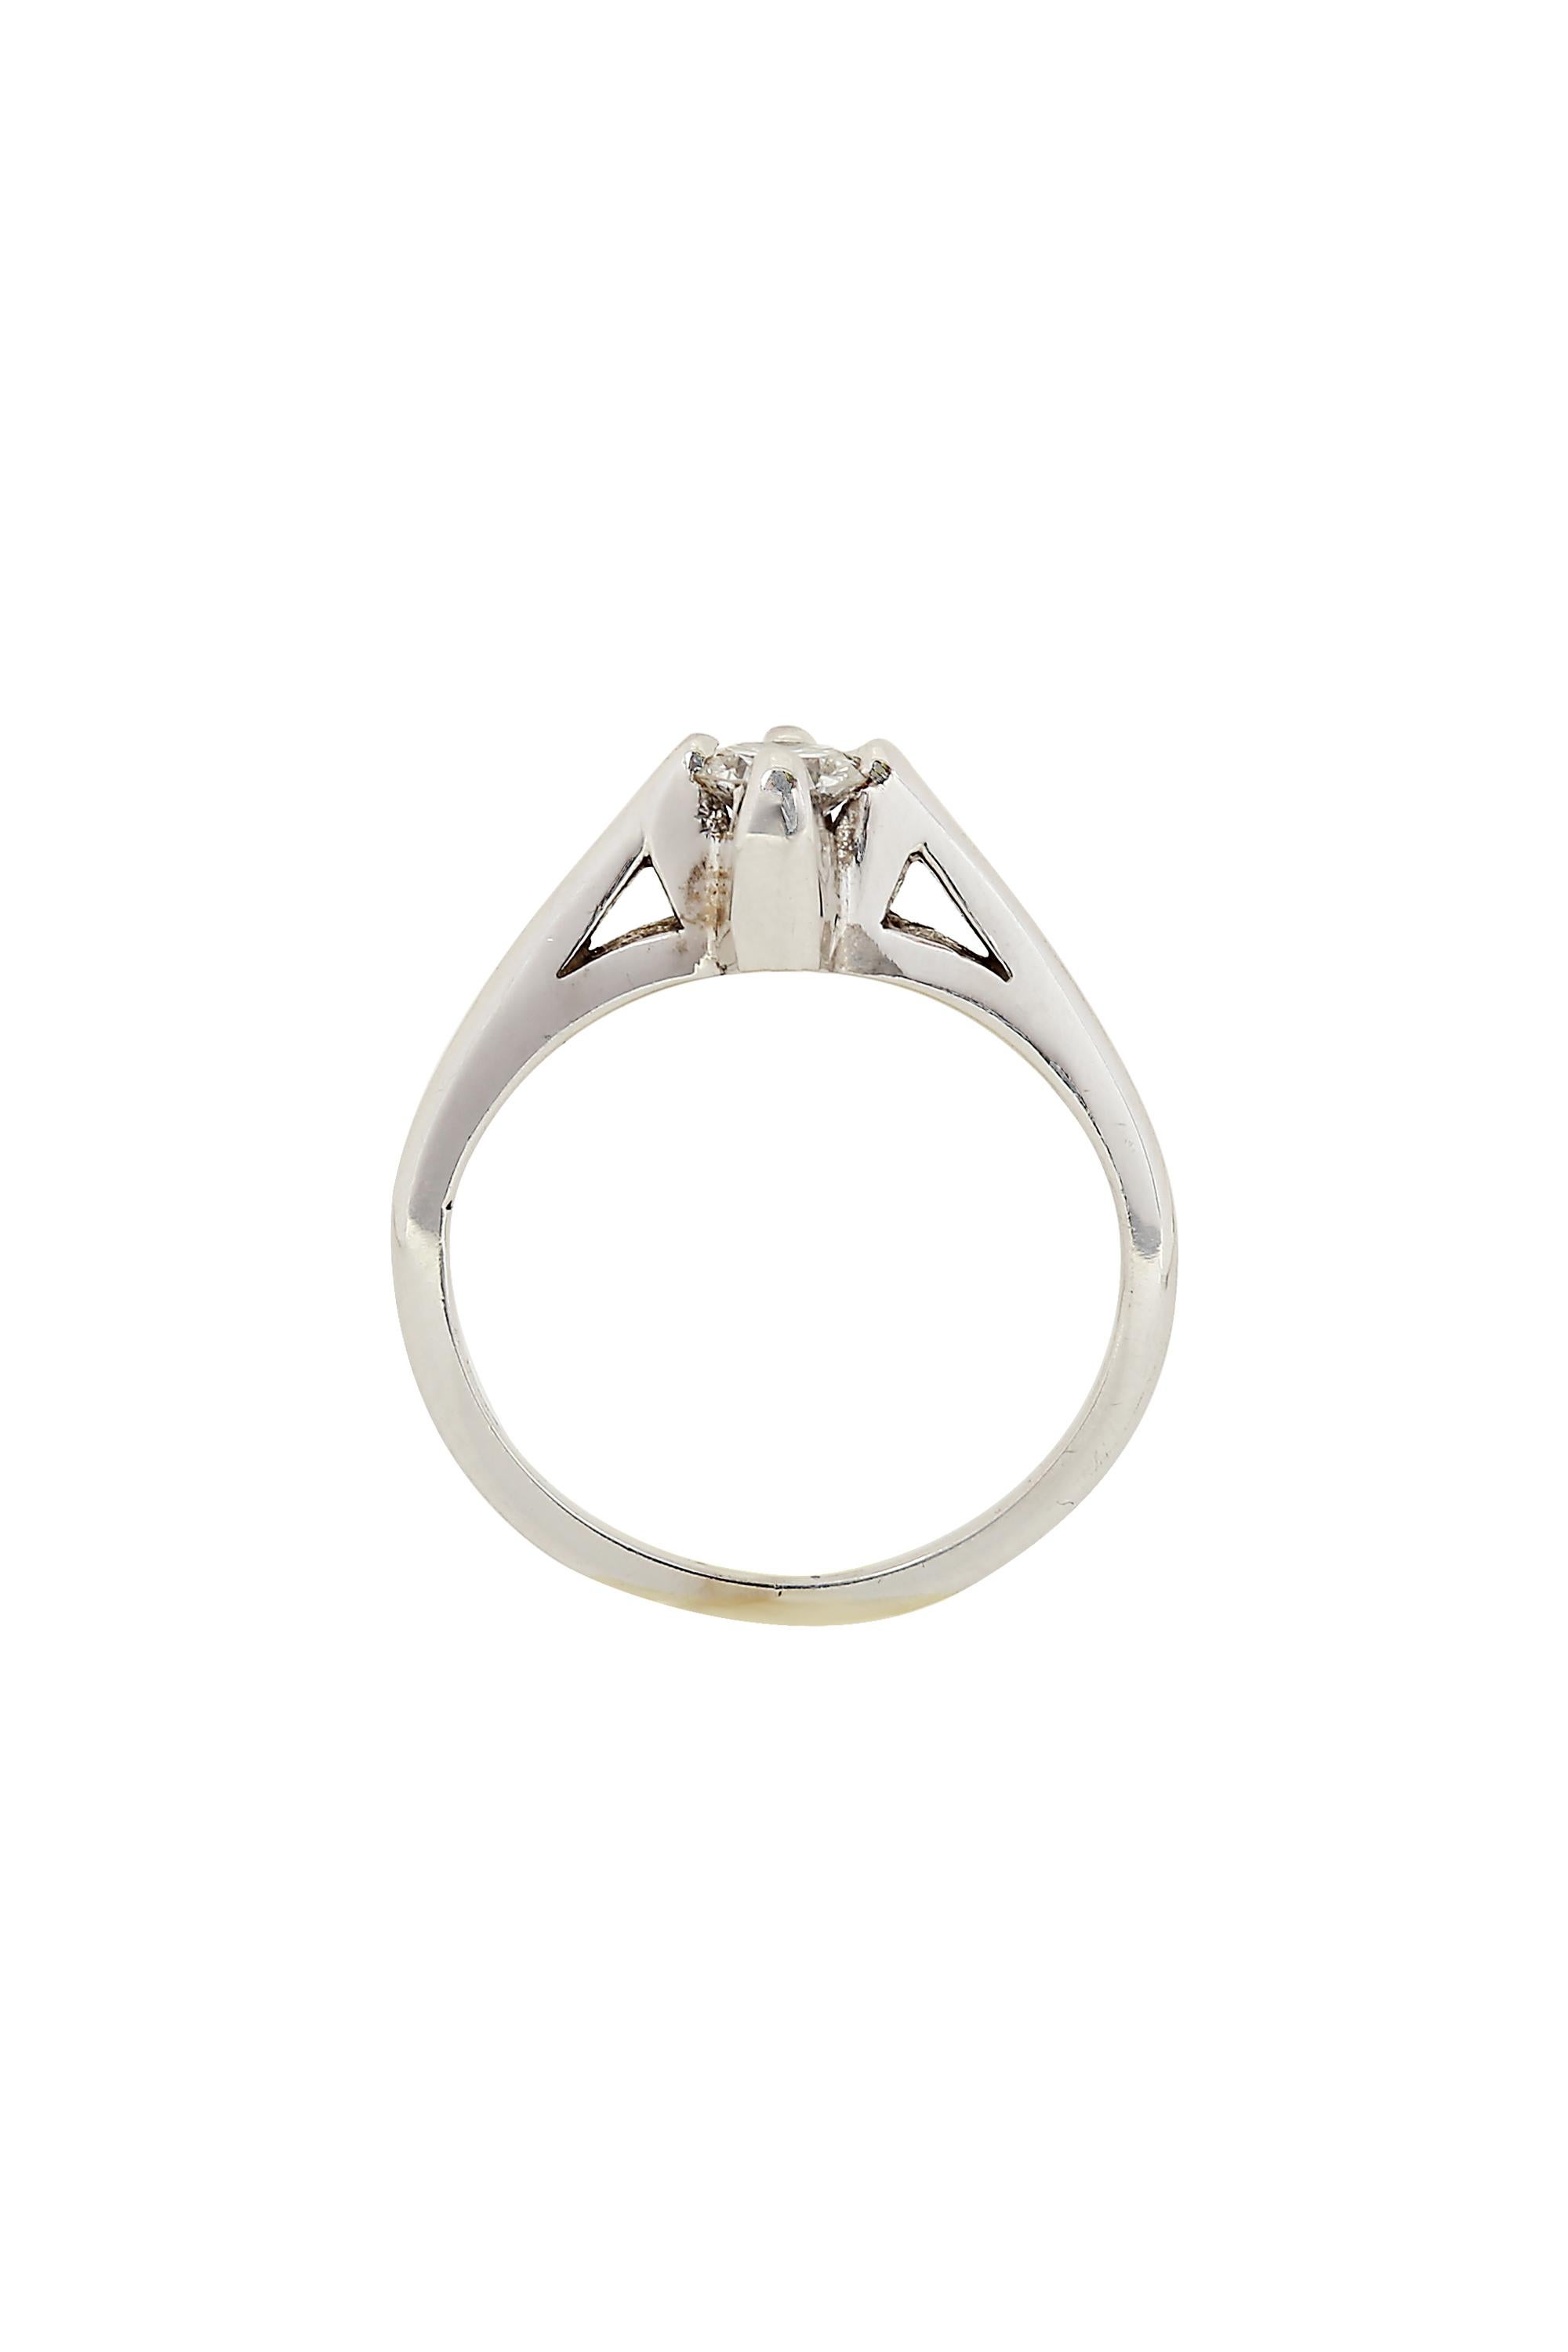 Brilliant Cut 0.30 Carat Diamond Solitaire 14 Karat White Gold Ring For Sale